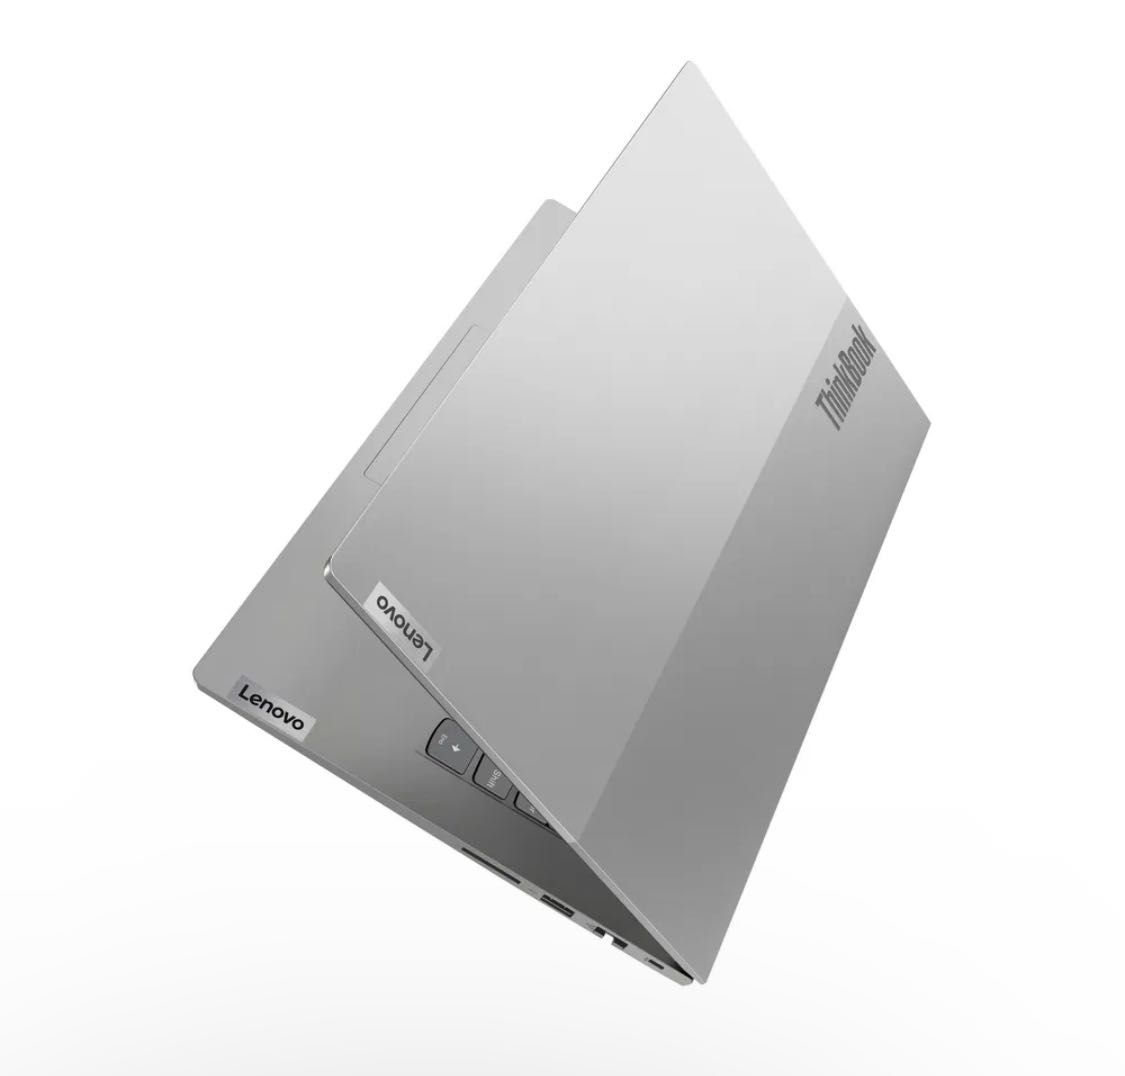 Lenovo ThinkBook 14 G2